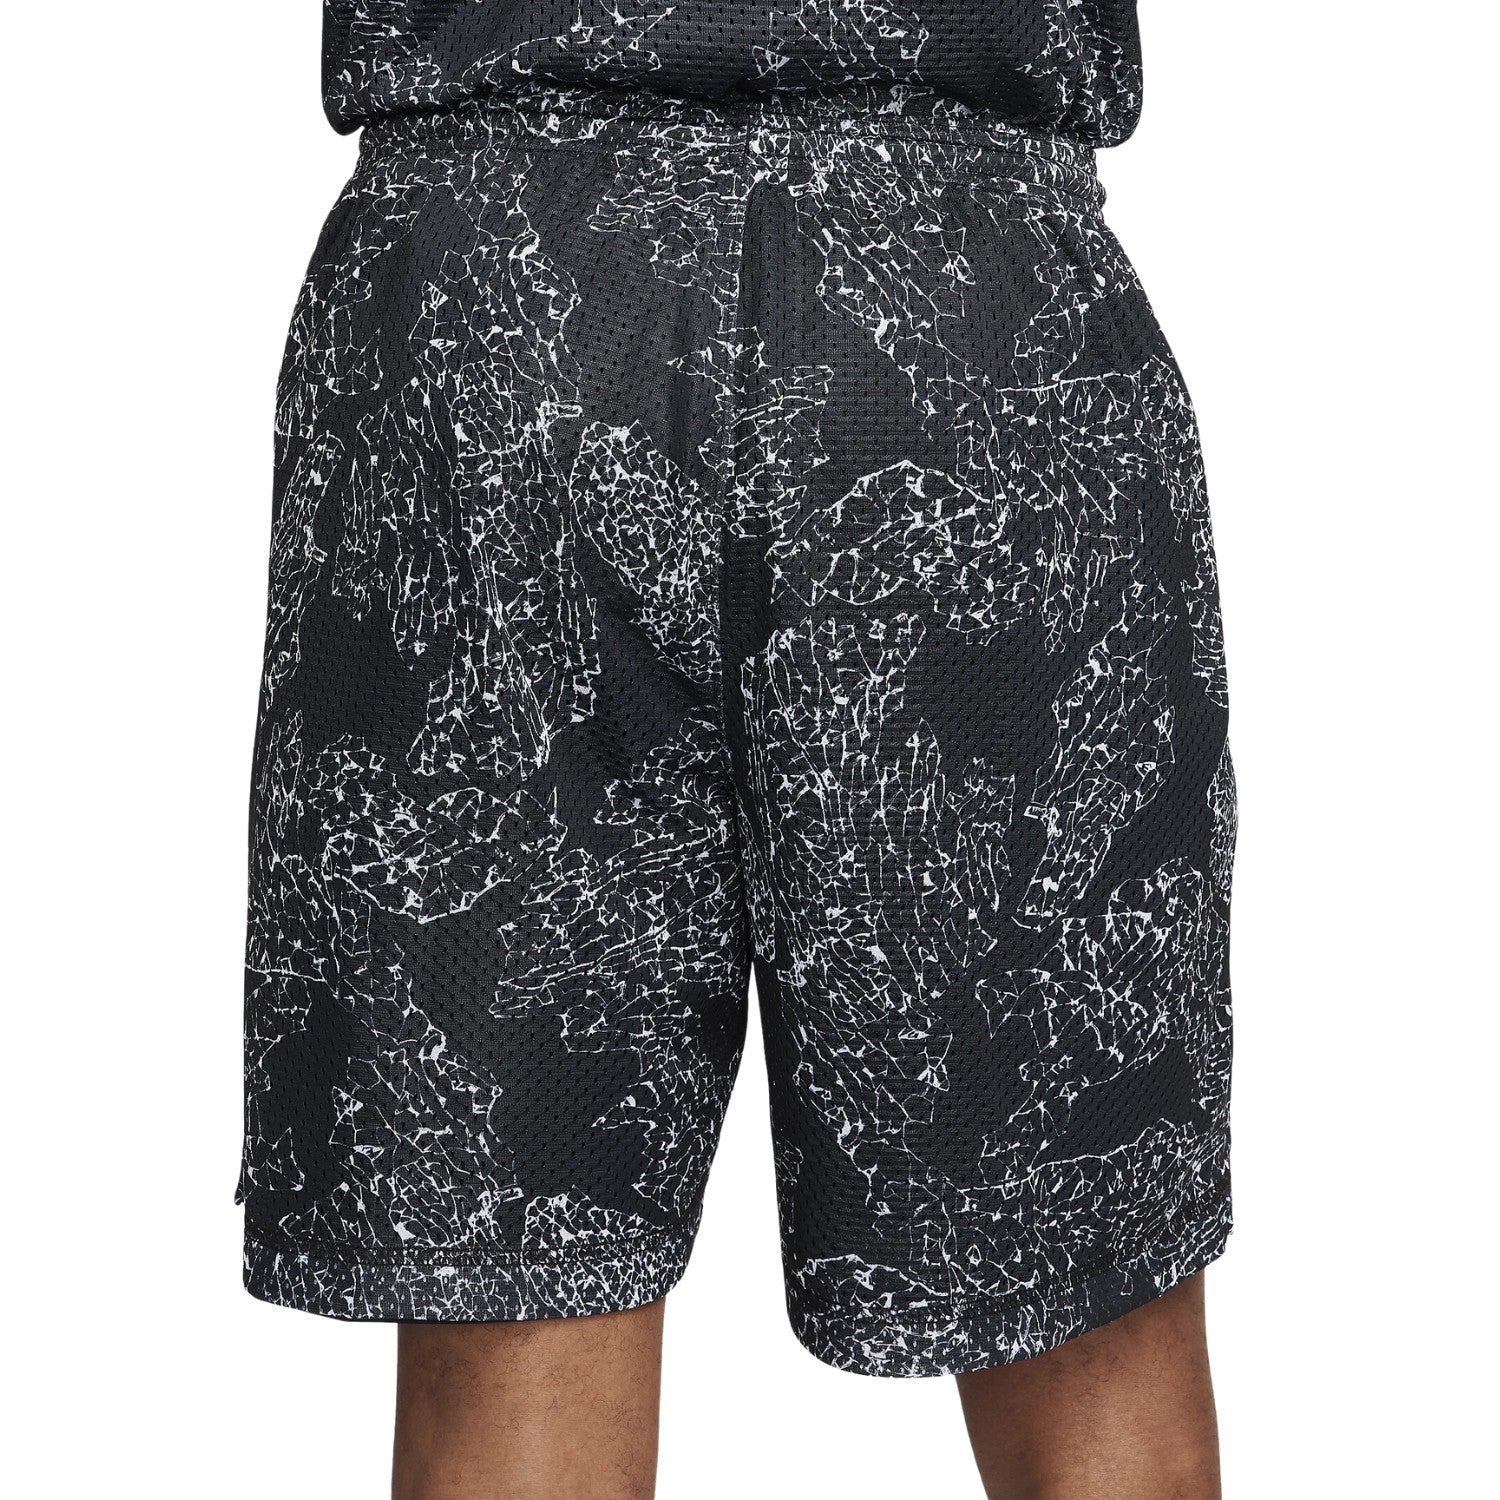 Nike Dri-fit Standard Issue Men's 6" Reversible Basketball Shorts Mens Style : Fb6915